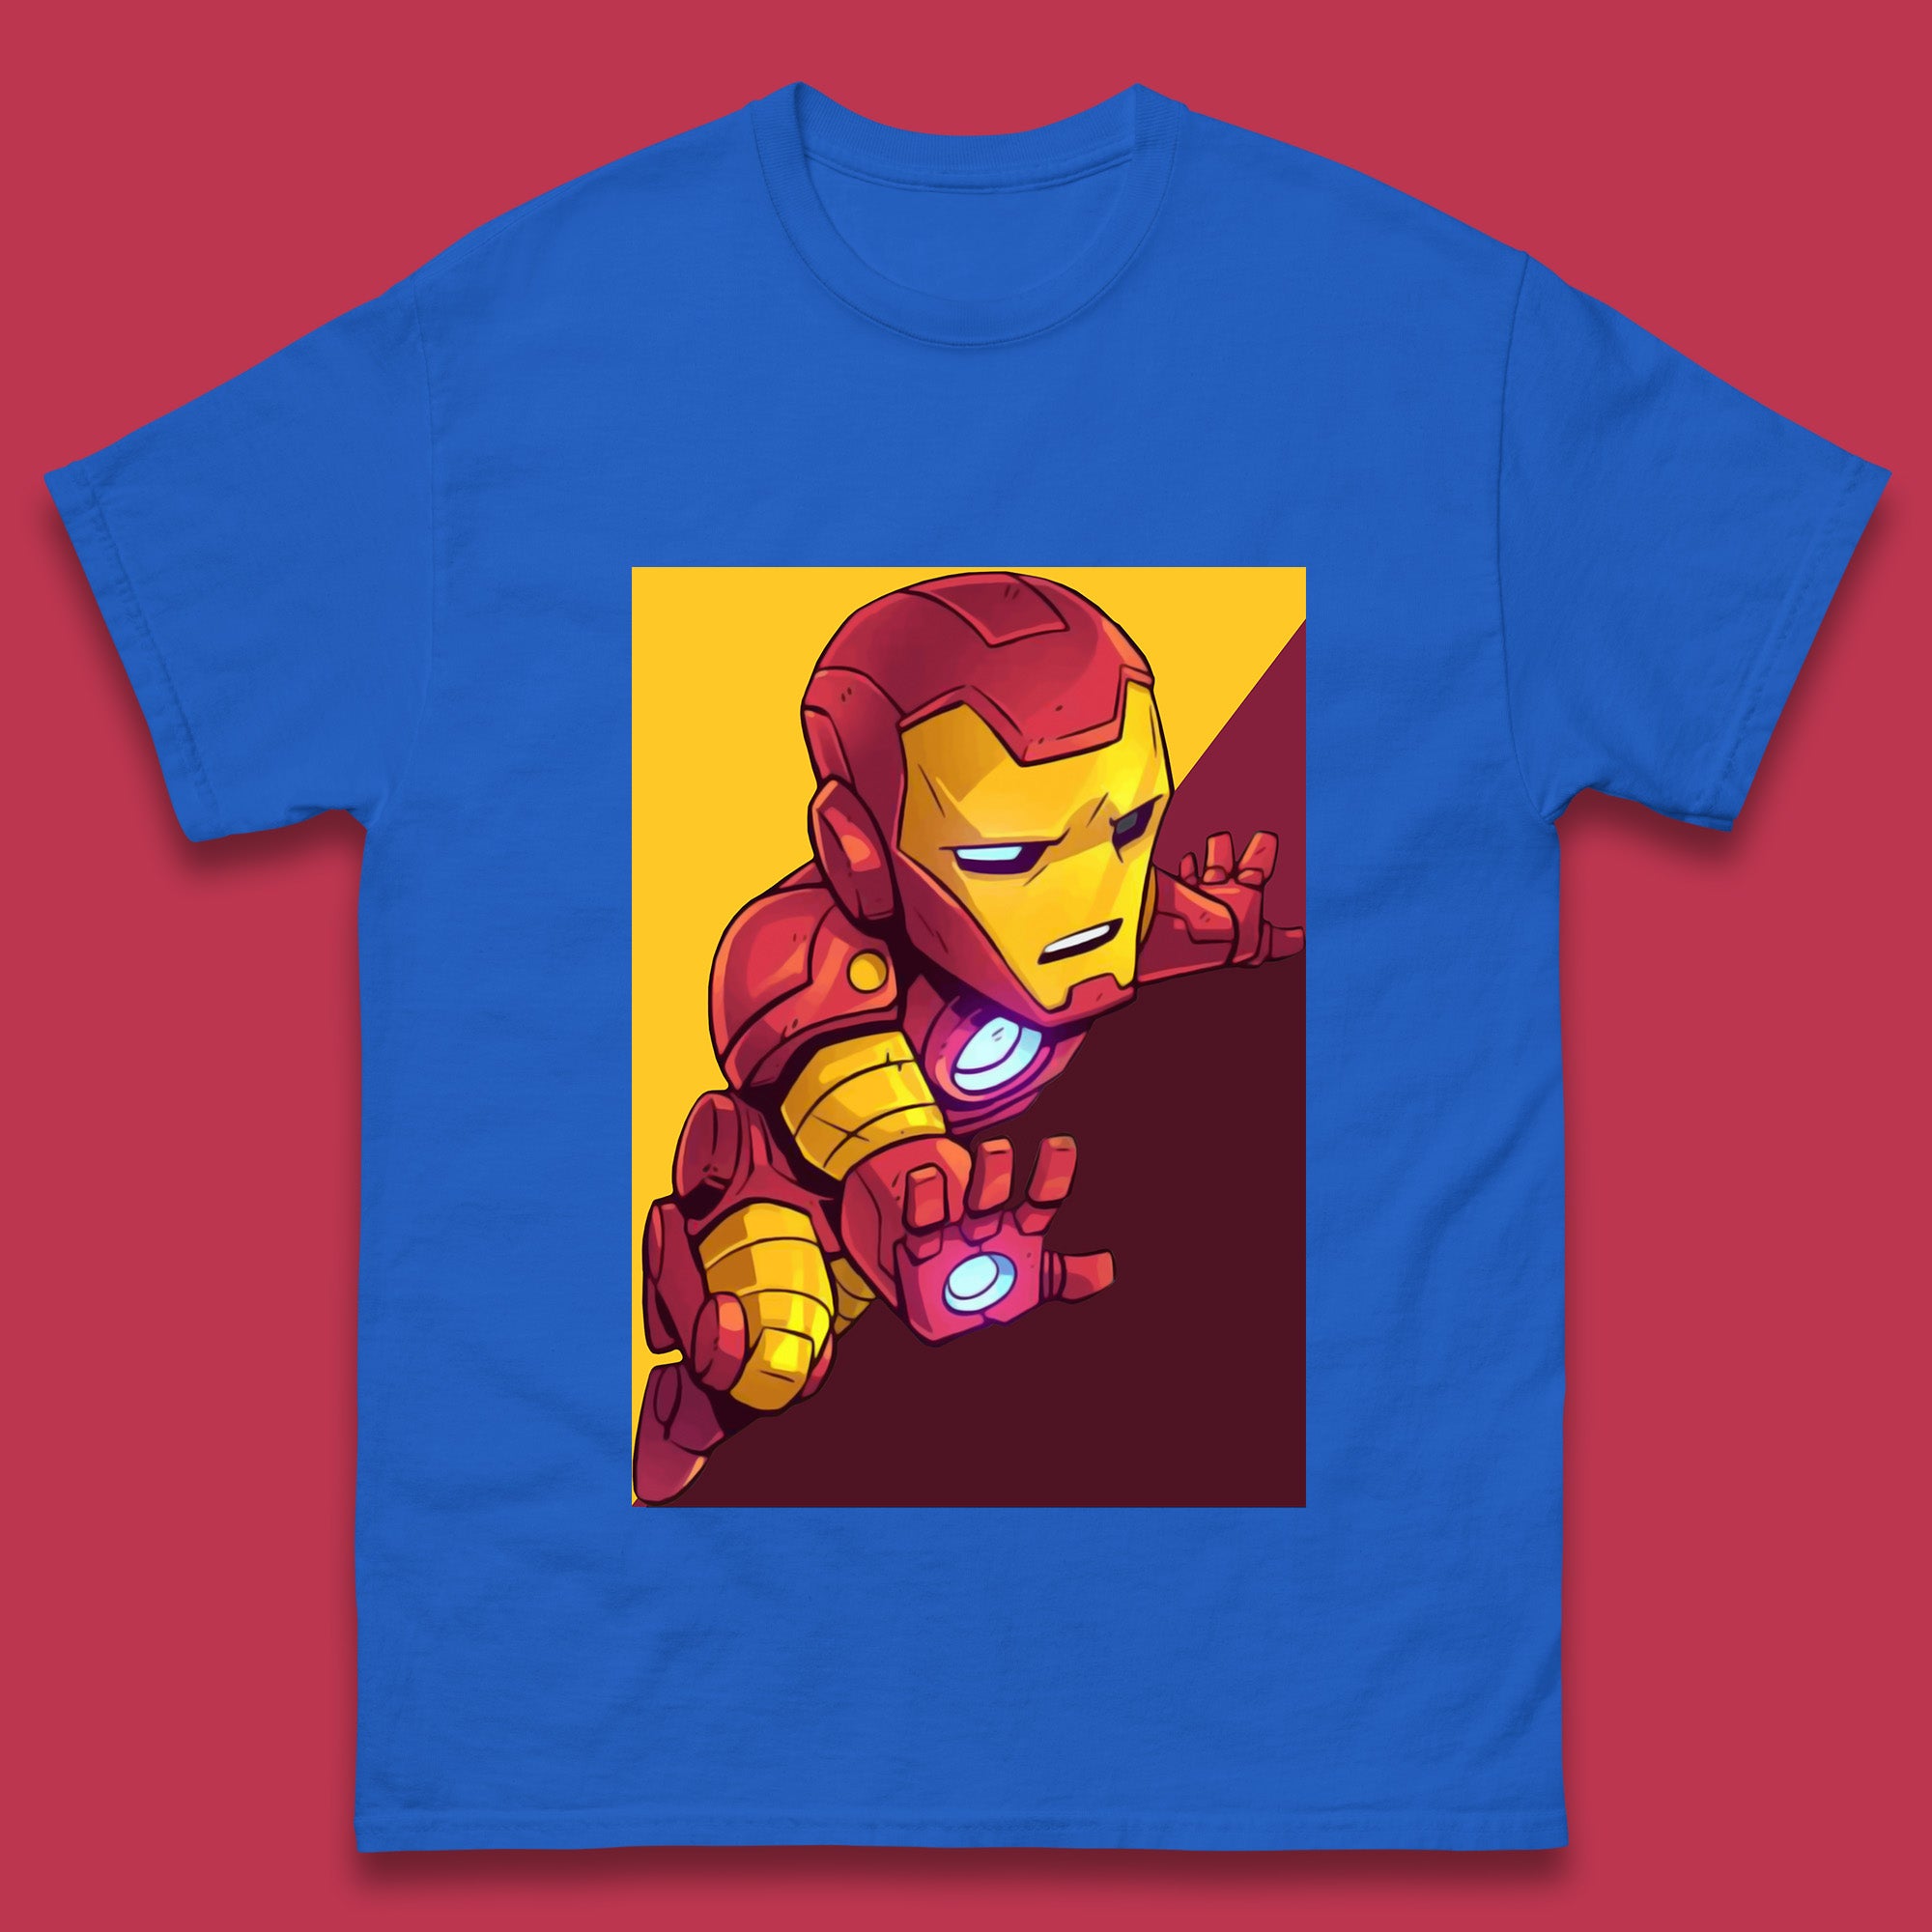 Flying Chibi Iron Man Superhero Marvel Avengers Comic Book Character Iron-Man Marvel Comics Mens Tee Top